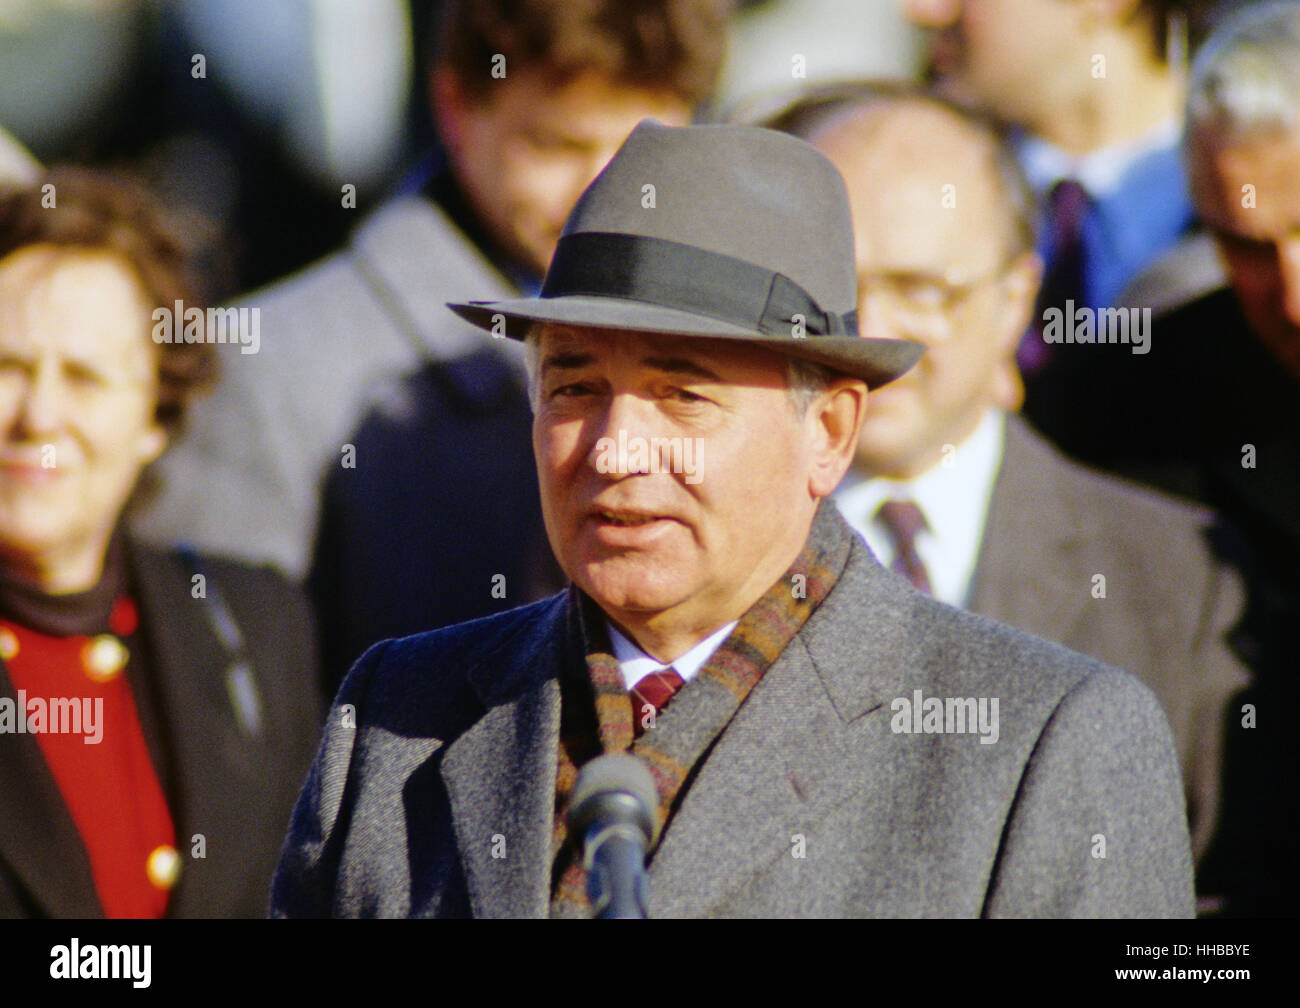 president-mikhail-gorbachev-of-the-soviet-union-makes-a-statement-HHBBYE.jpg